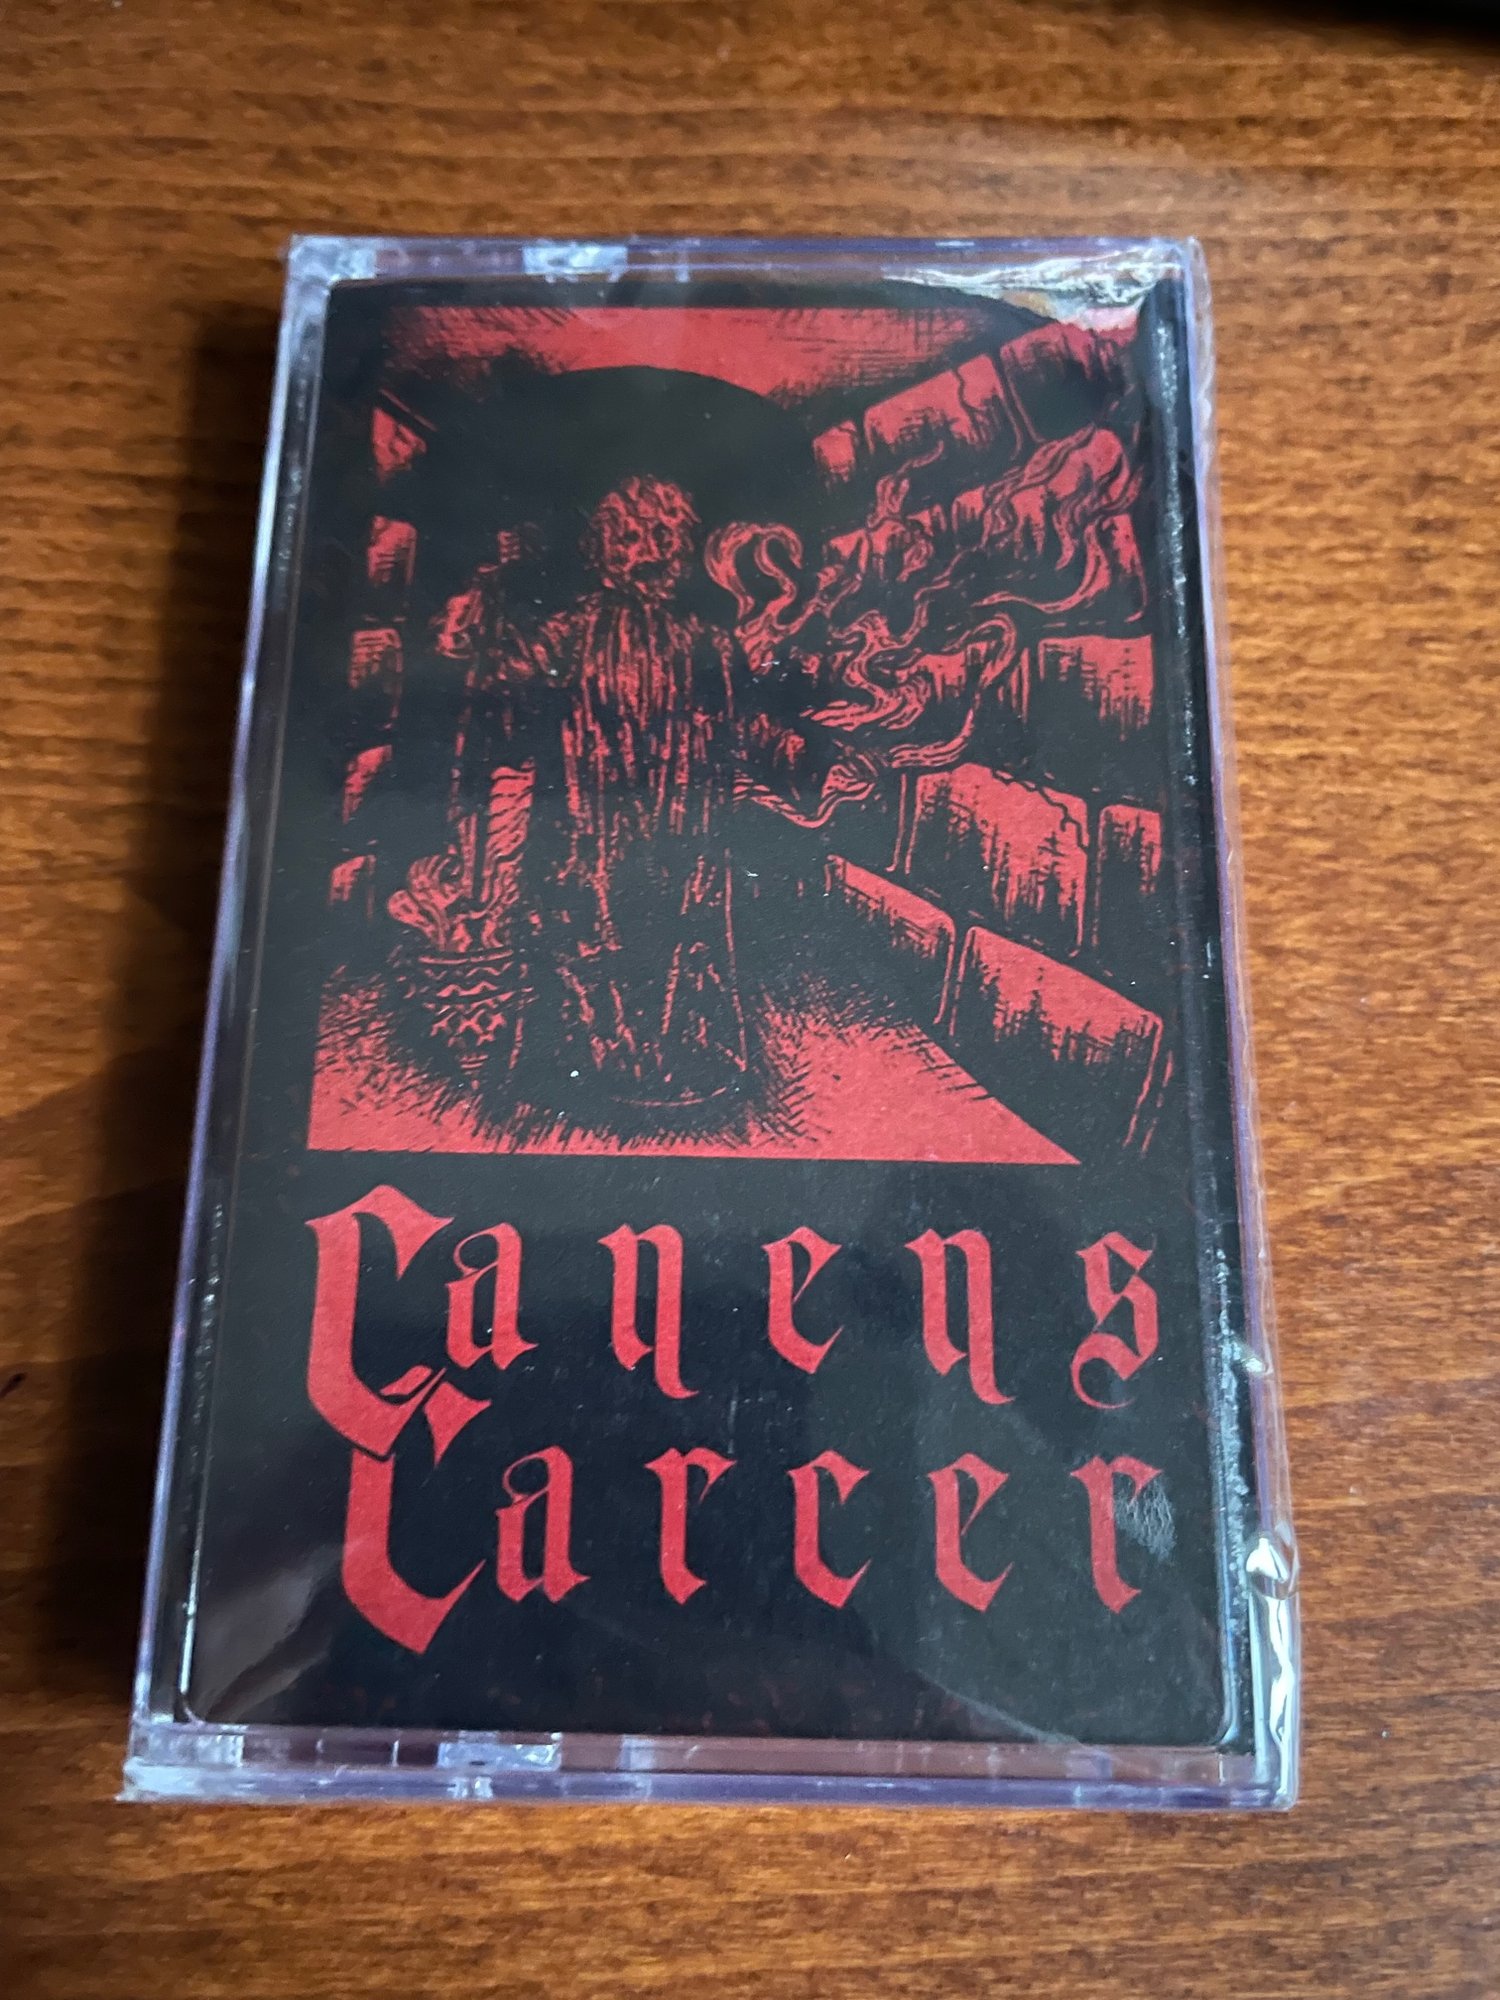 Canens Carcer - s/t